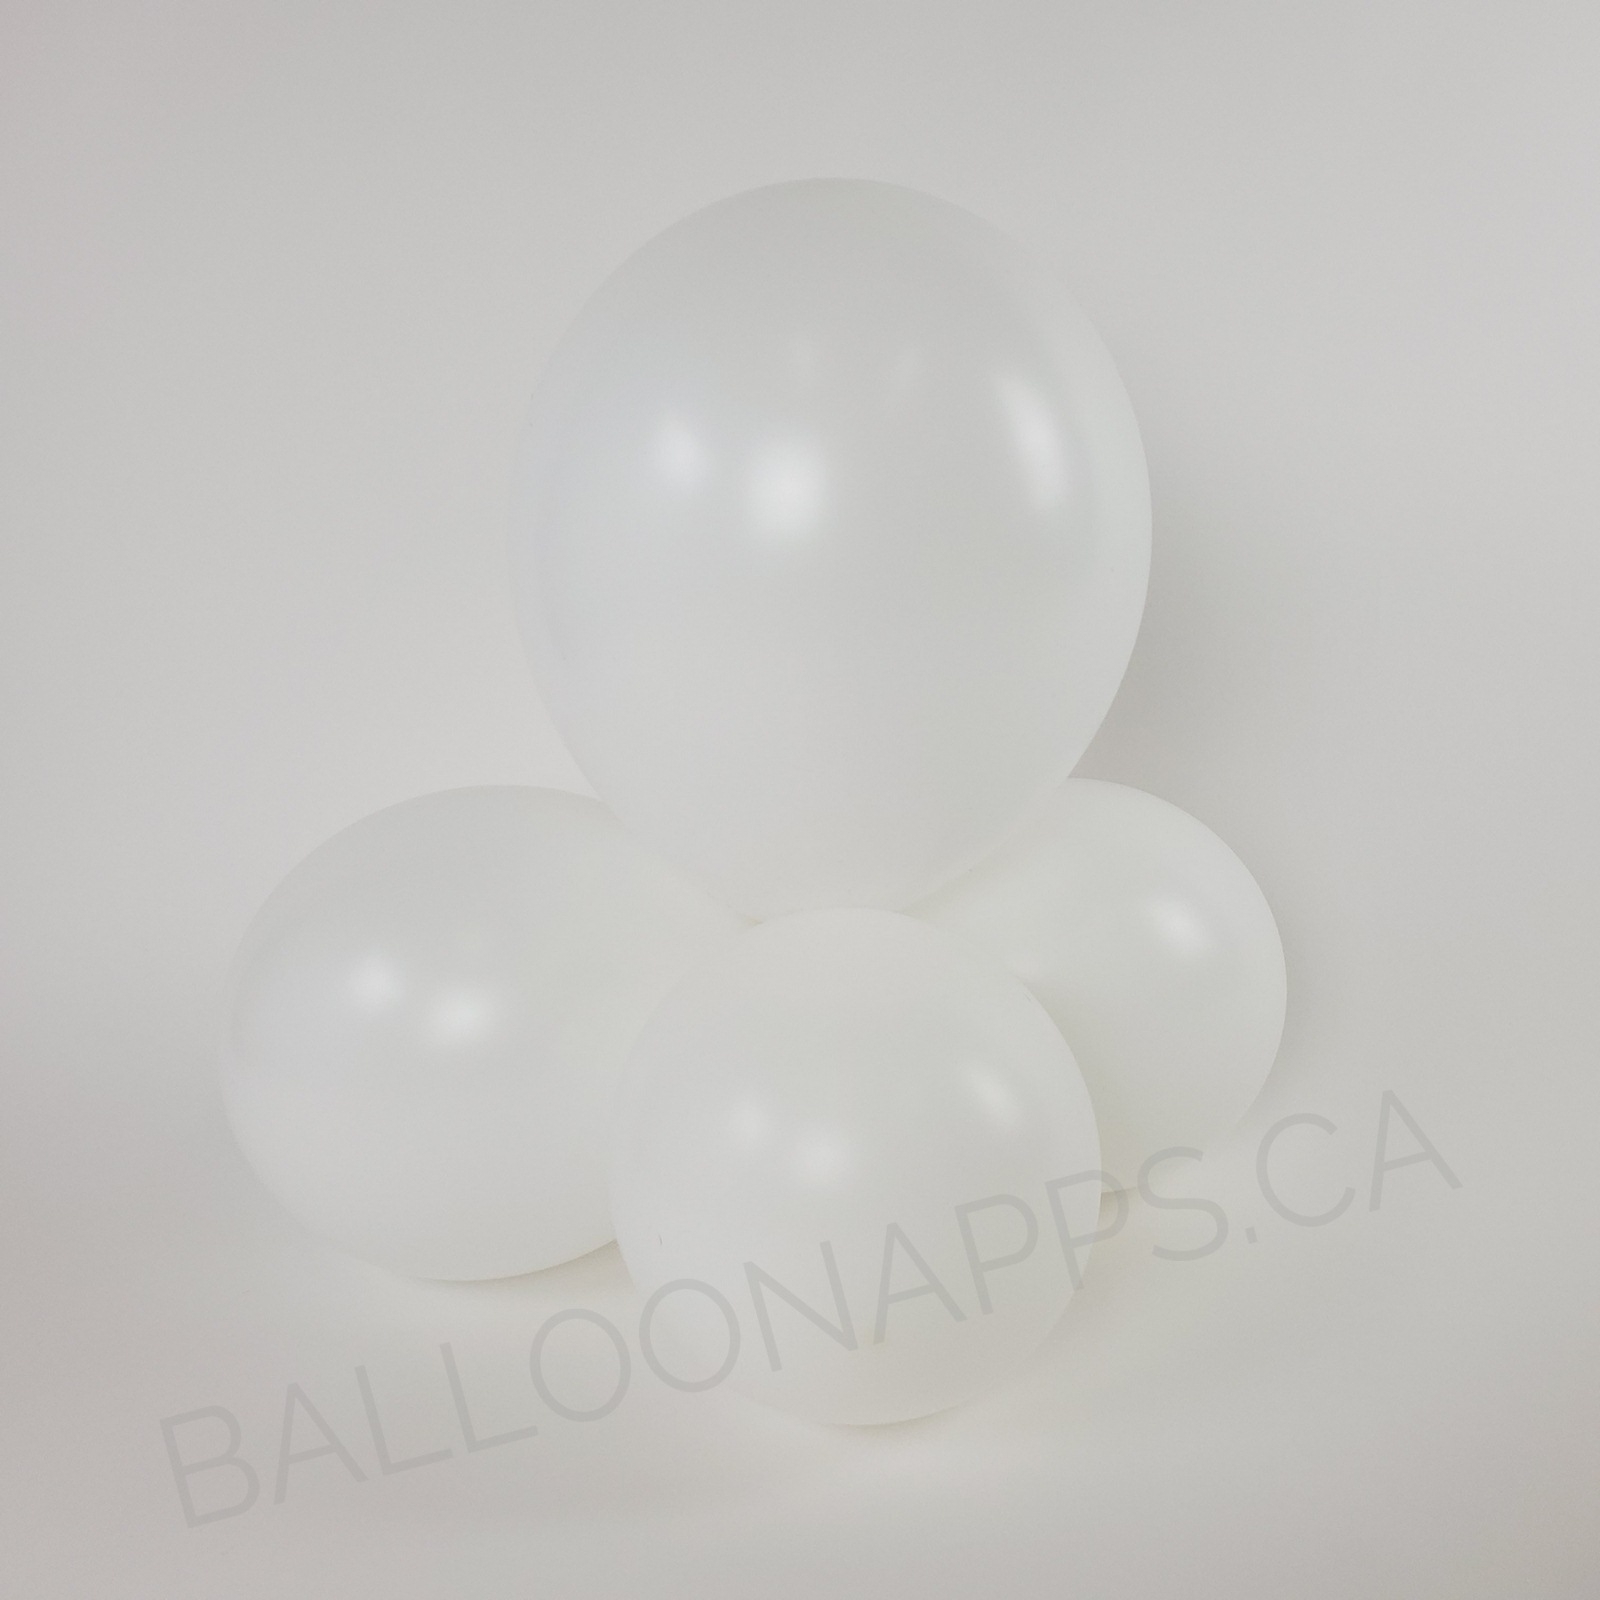 balloon texture Sempertex 6